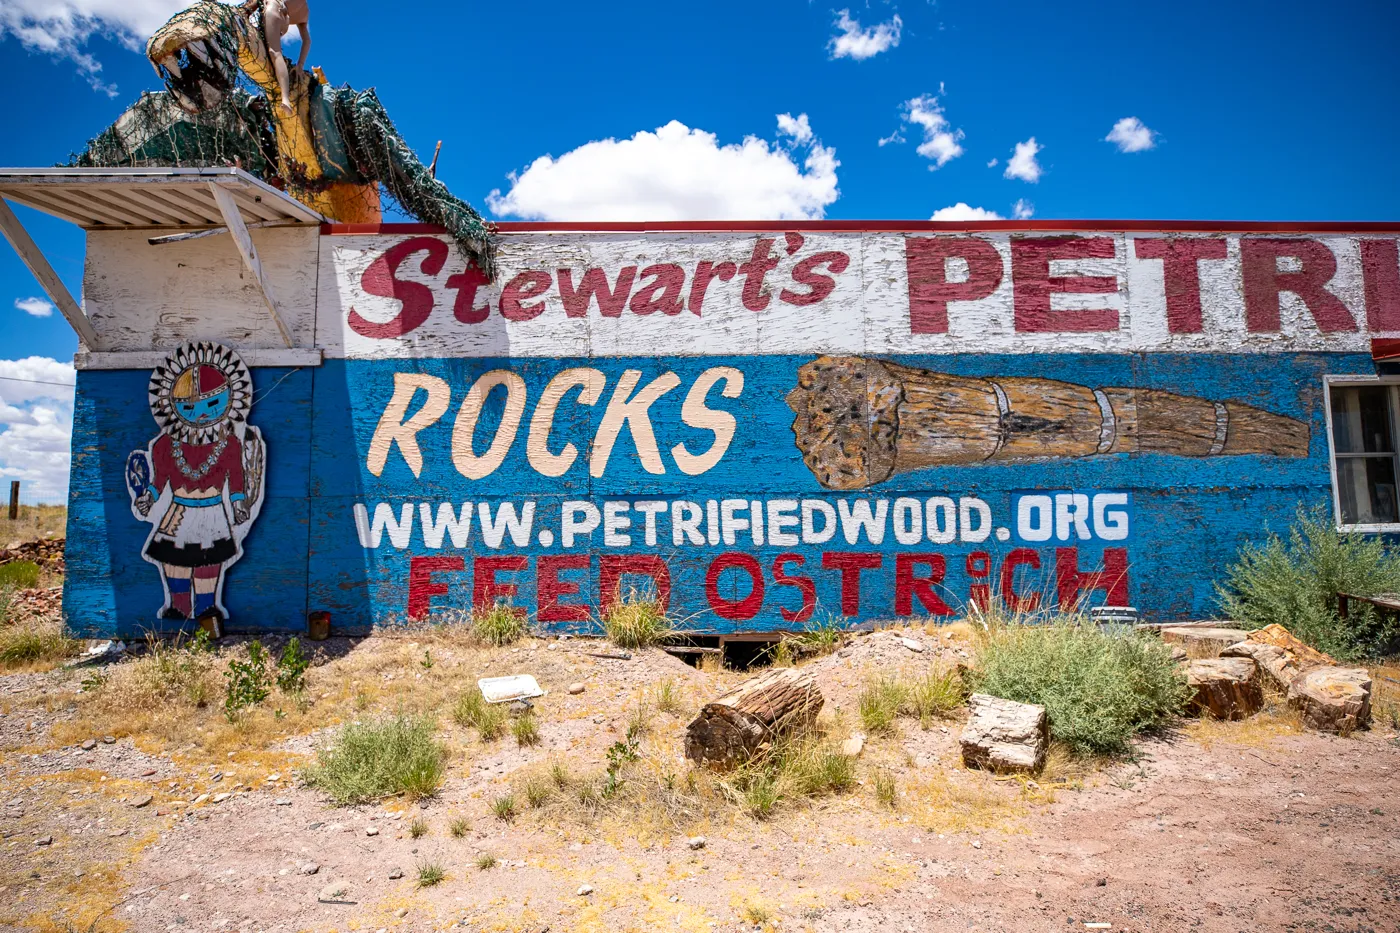 Stewart's Petrified Wood in Holbrook, Arizona Route 66 Roadside Attraction